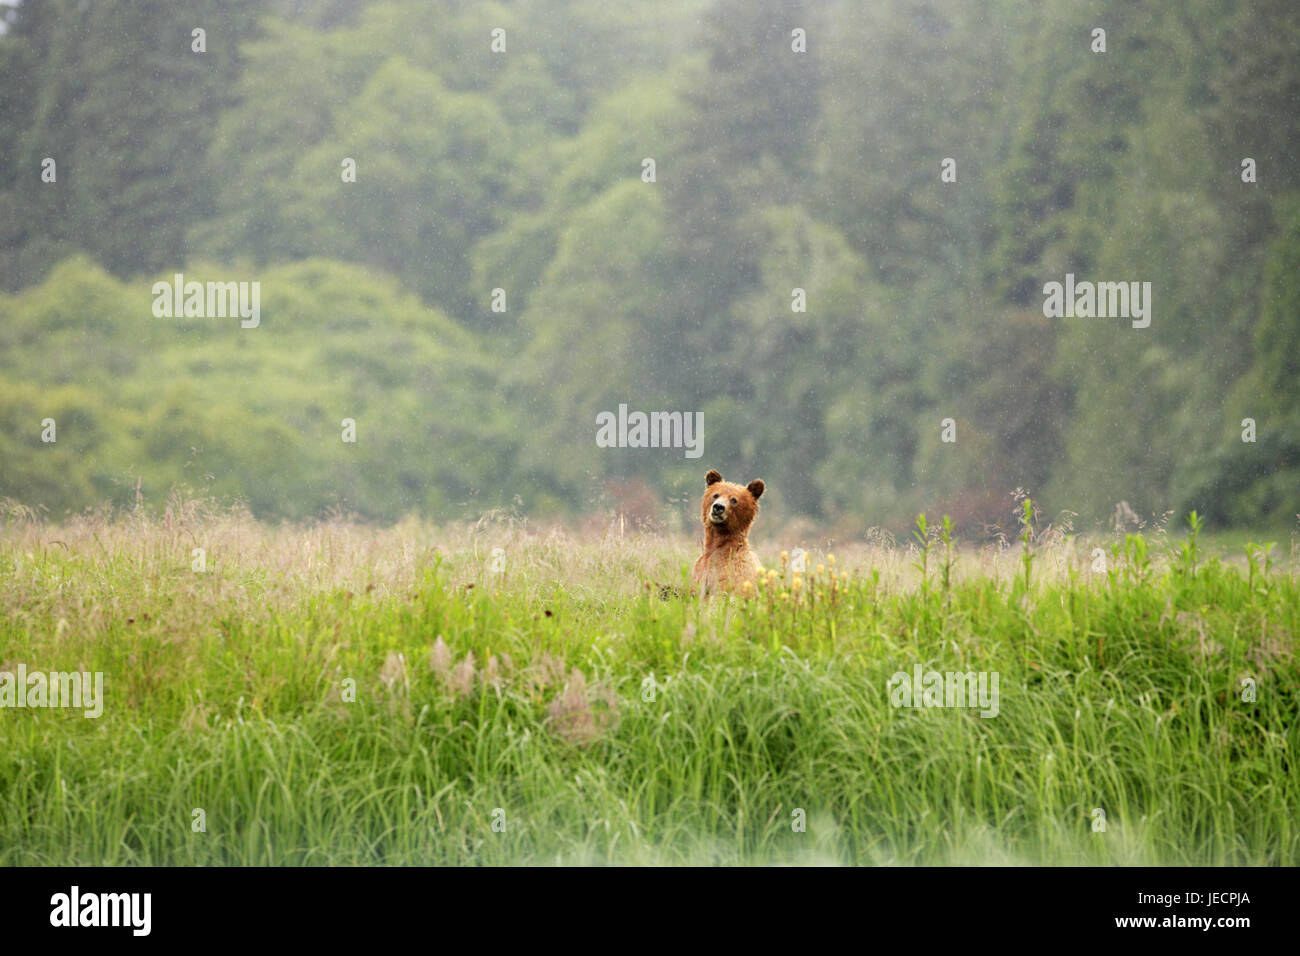 Canada, British Columbia, 'Great Bear Rainforest', brown bear, Ursus arctos, grass, Stock Photo